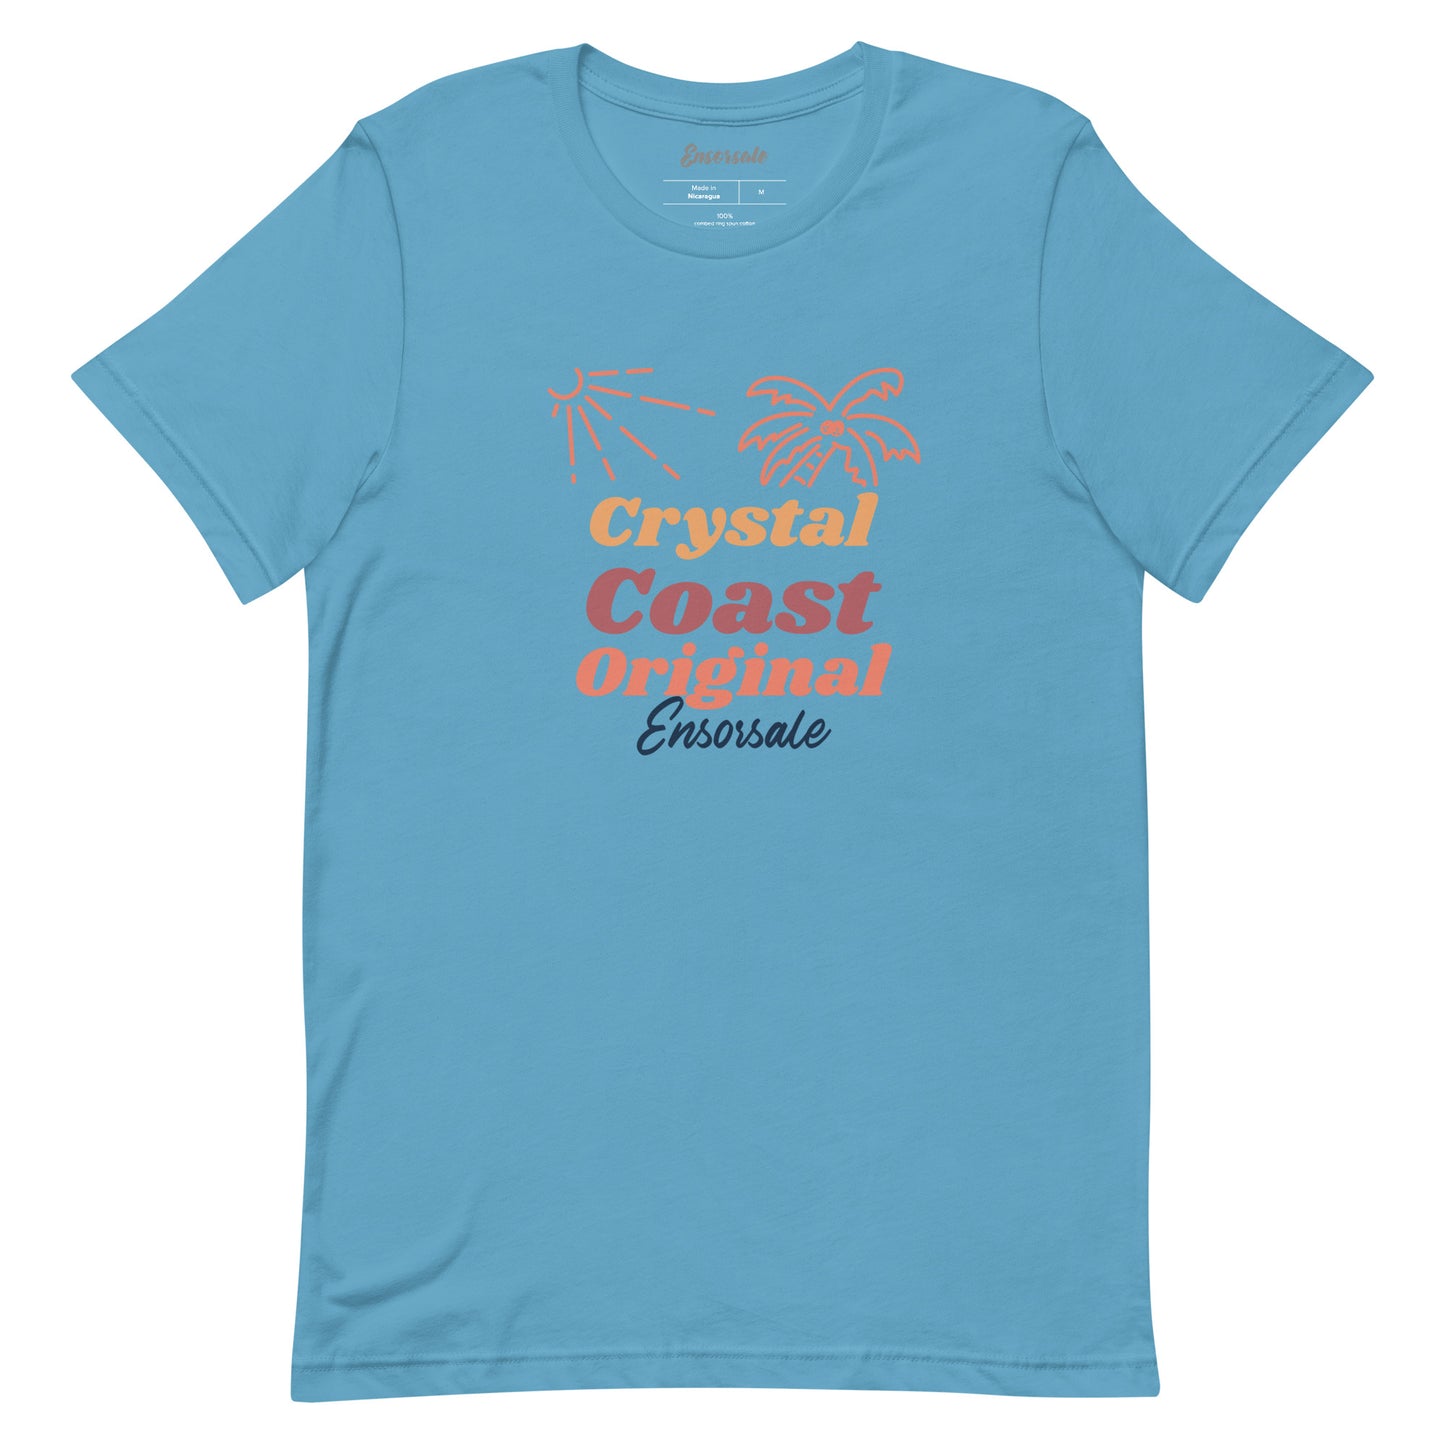 Crystal Coast Original Throwback Design T-shirt